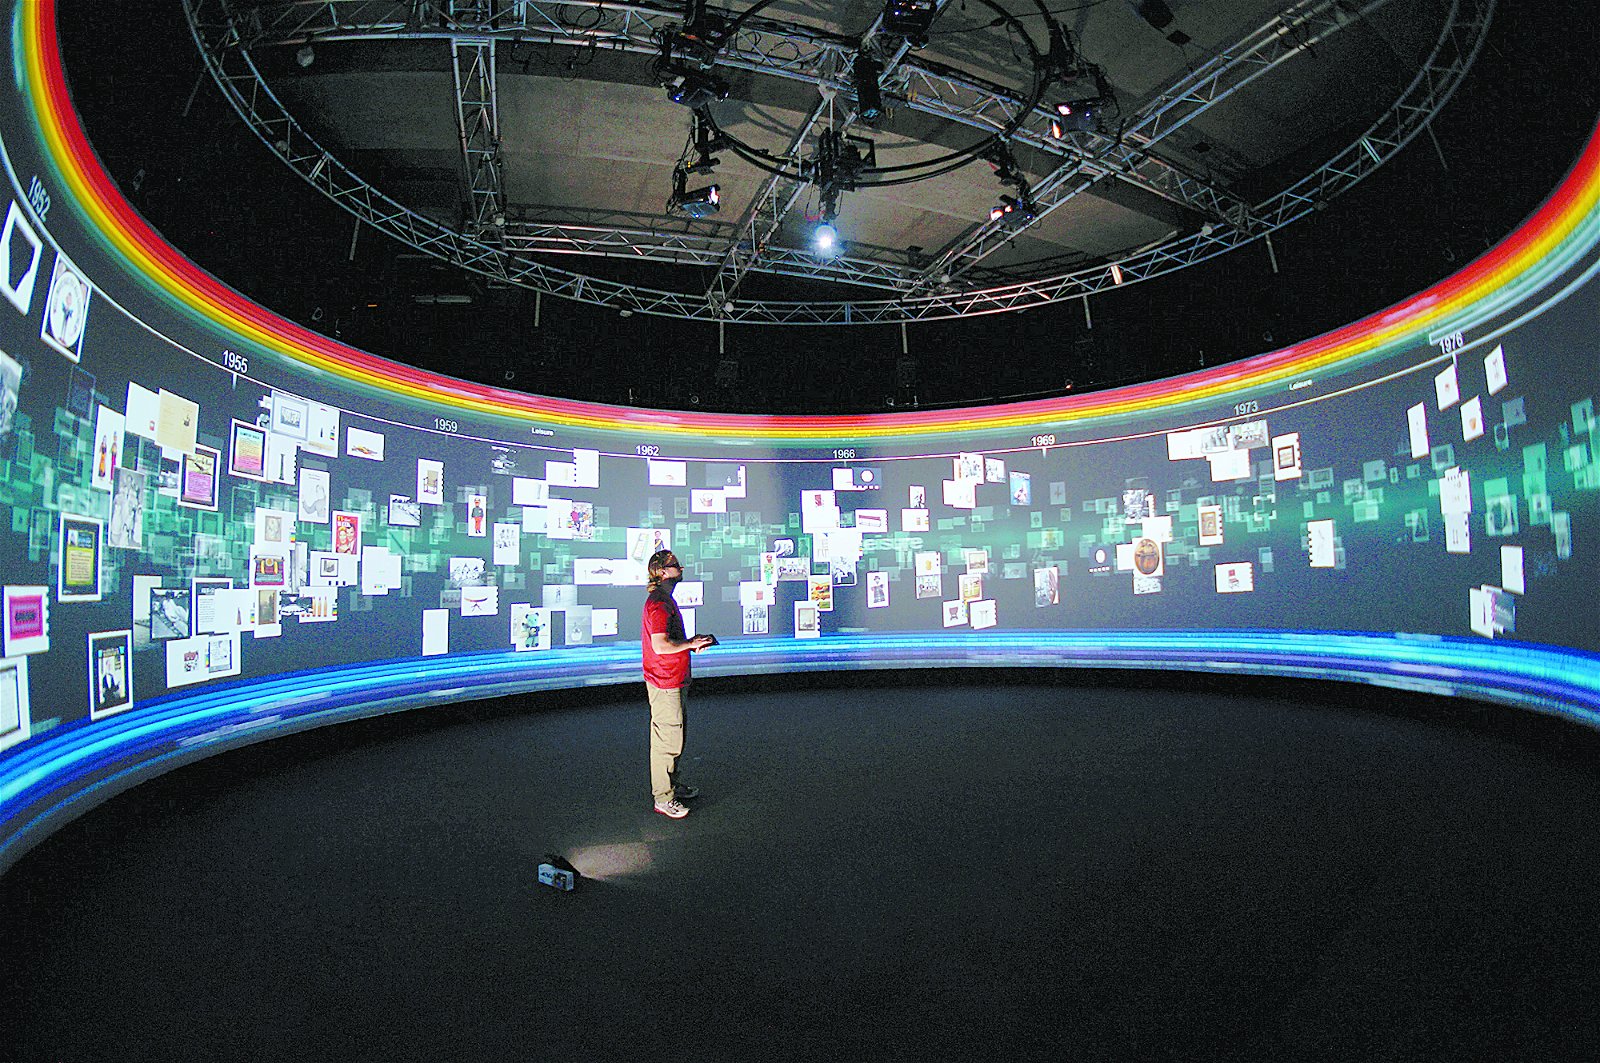 mARChive是维多利亚博物馆的一个新界面，它能收藏高达1 0万个文化数据纪录。它是一个360度3D屏幕显示体验，参访者走进这个空间后便会被这些数据纪录“包围”，增添真实感。